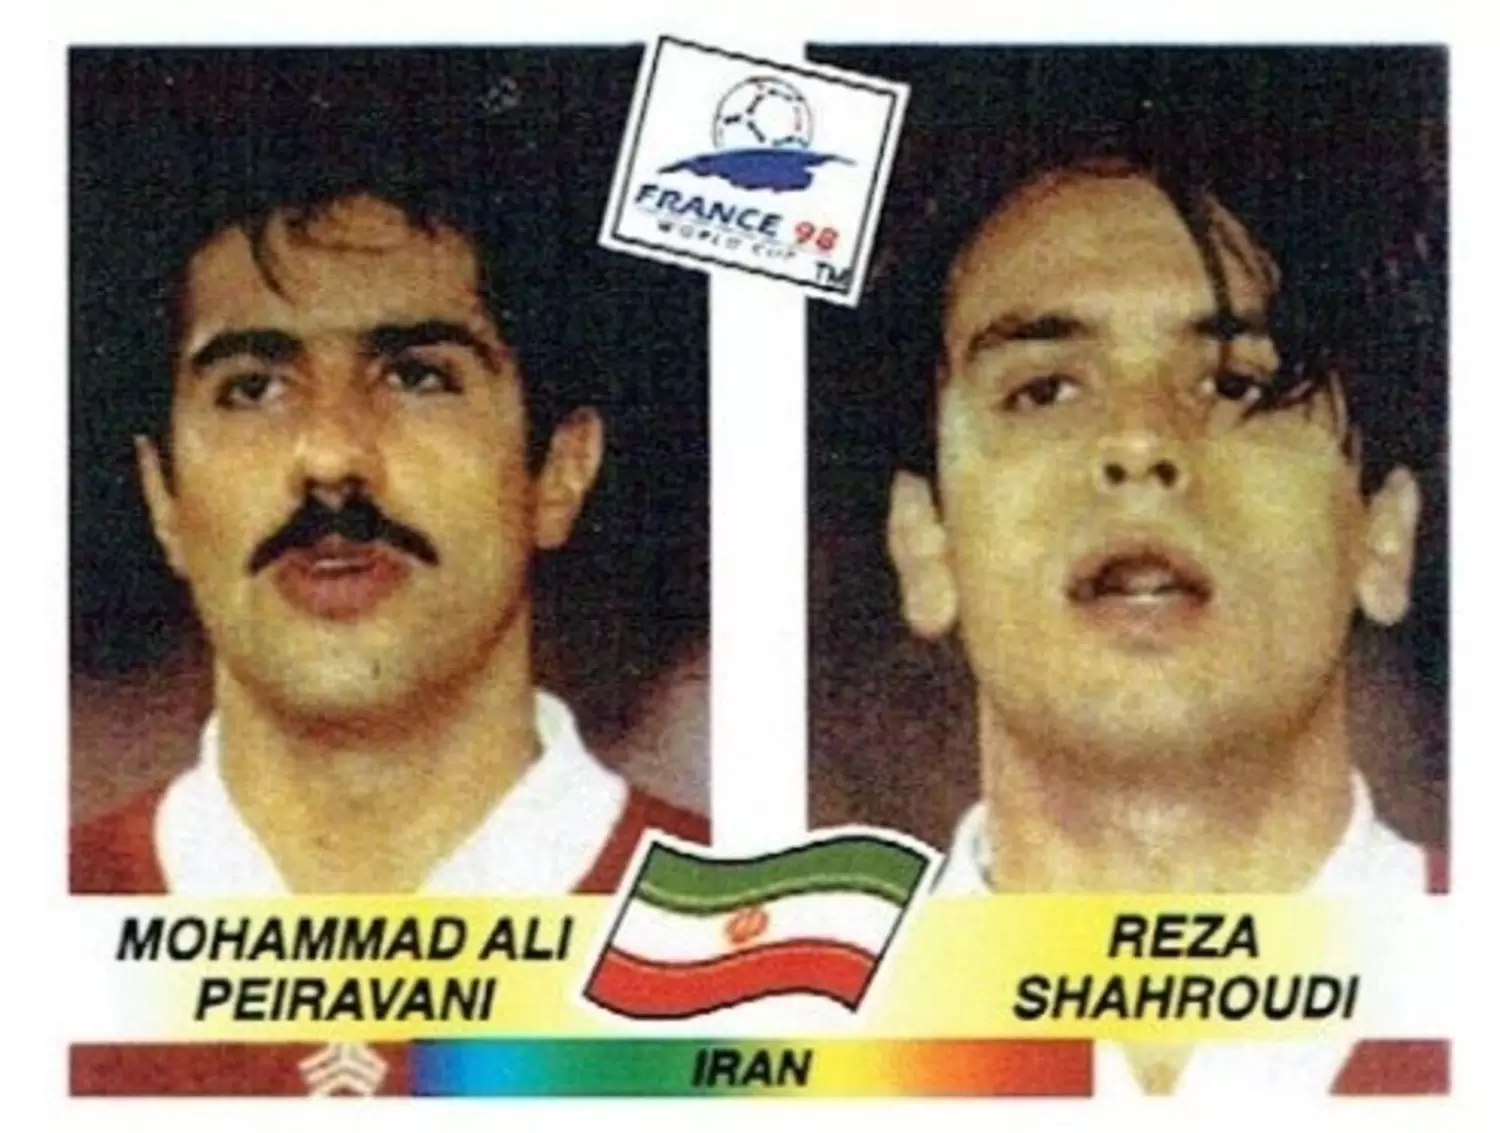 France 98 - Mohammad Ali Peiravani / Reza Shahroudi - IRN